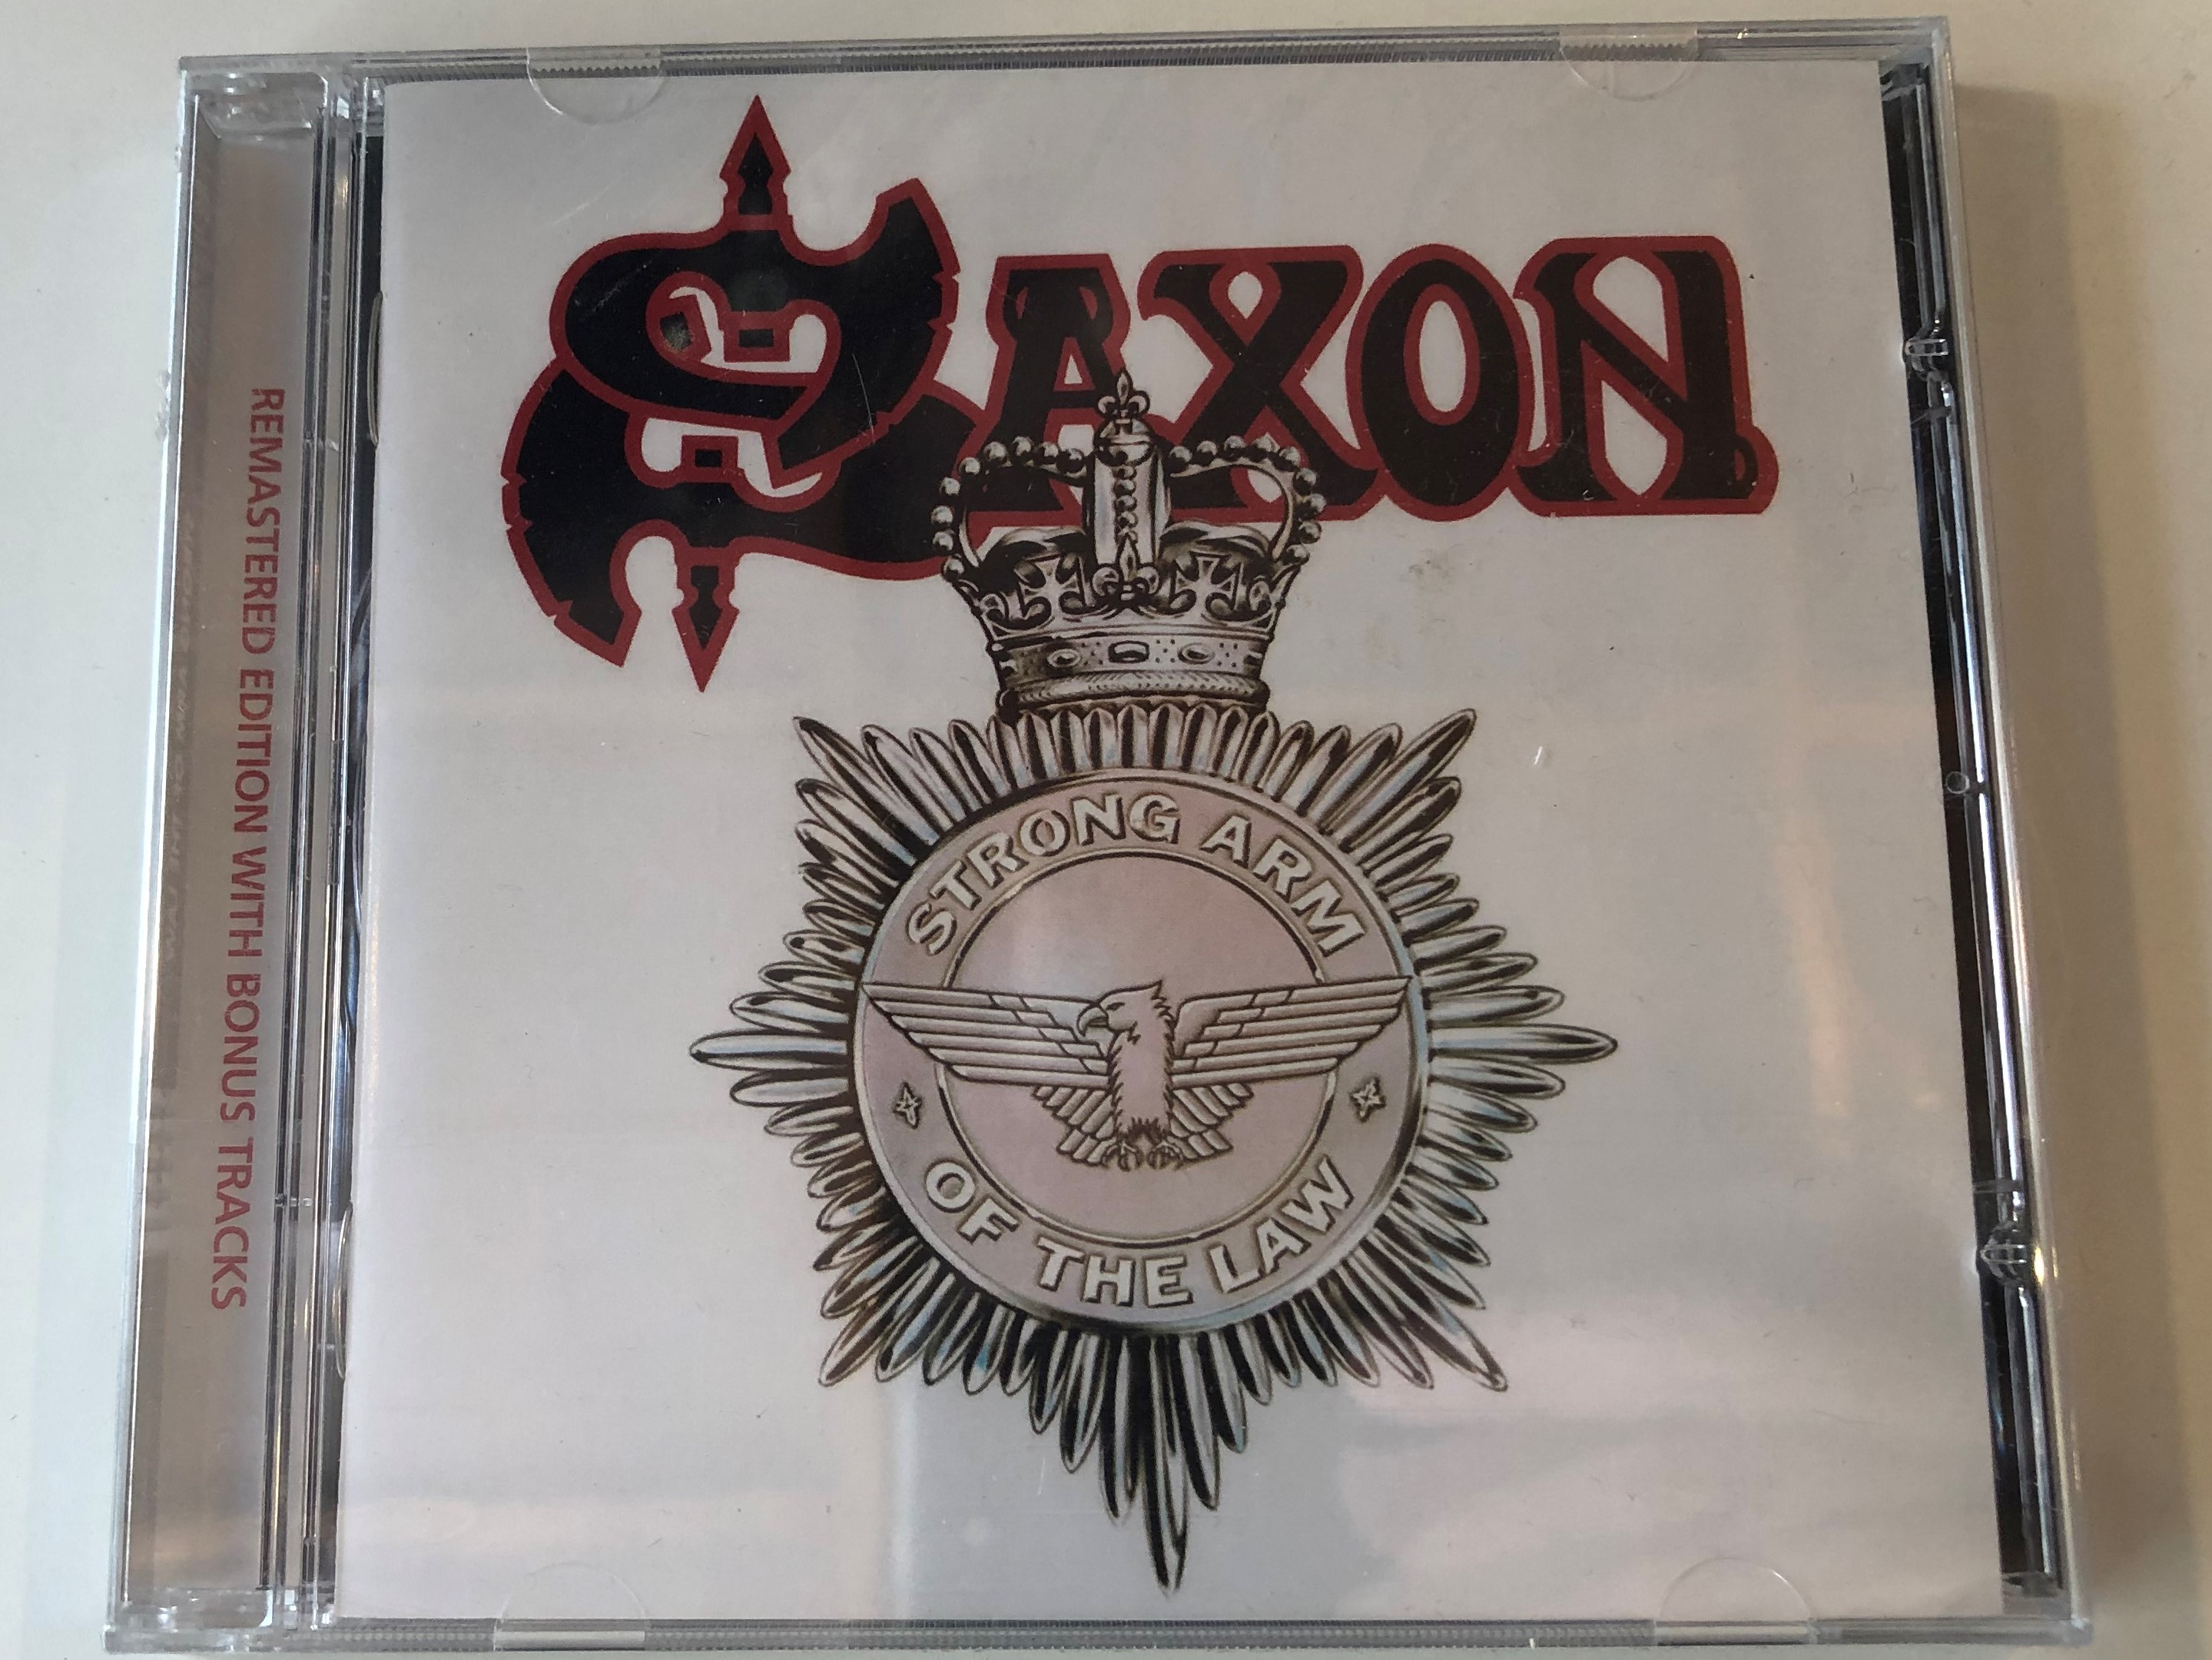 saxon-strong-arm-of-the-law-remastered-edition-with-bonus-tracks-emi-audio-cd-2009-5099969444425-1-.jpg